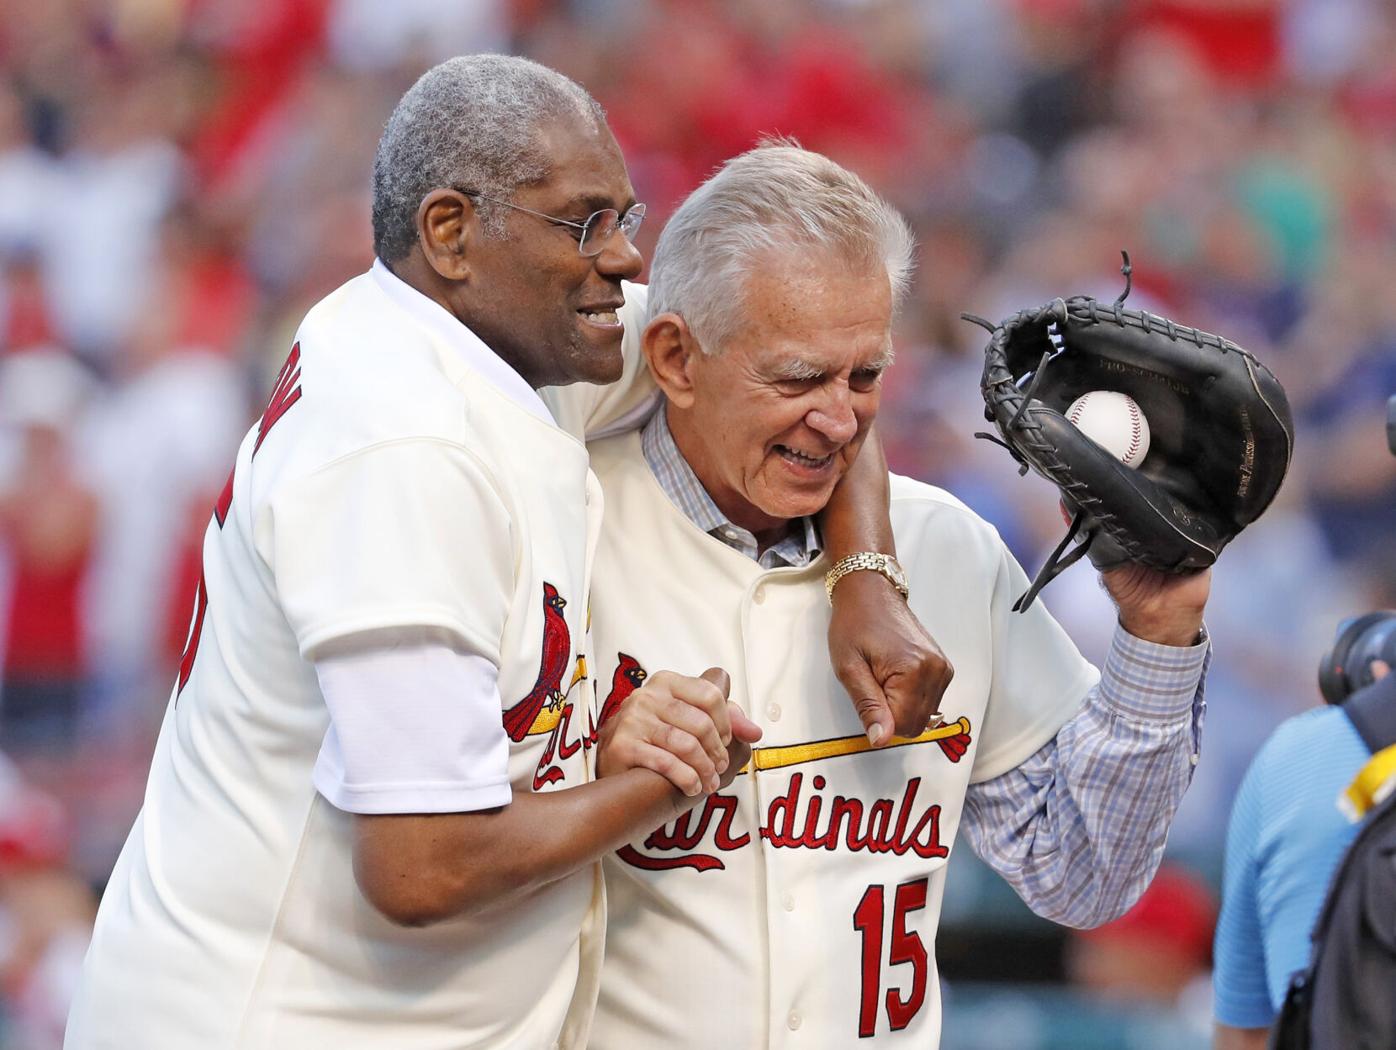 Bob Gibson, Baseball Hall of Fame pitcher, dies at 84